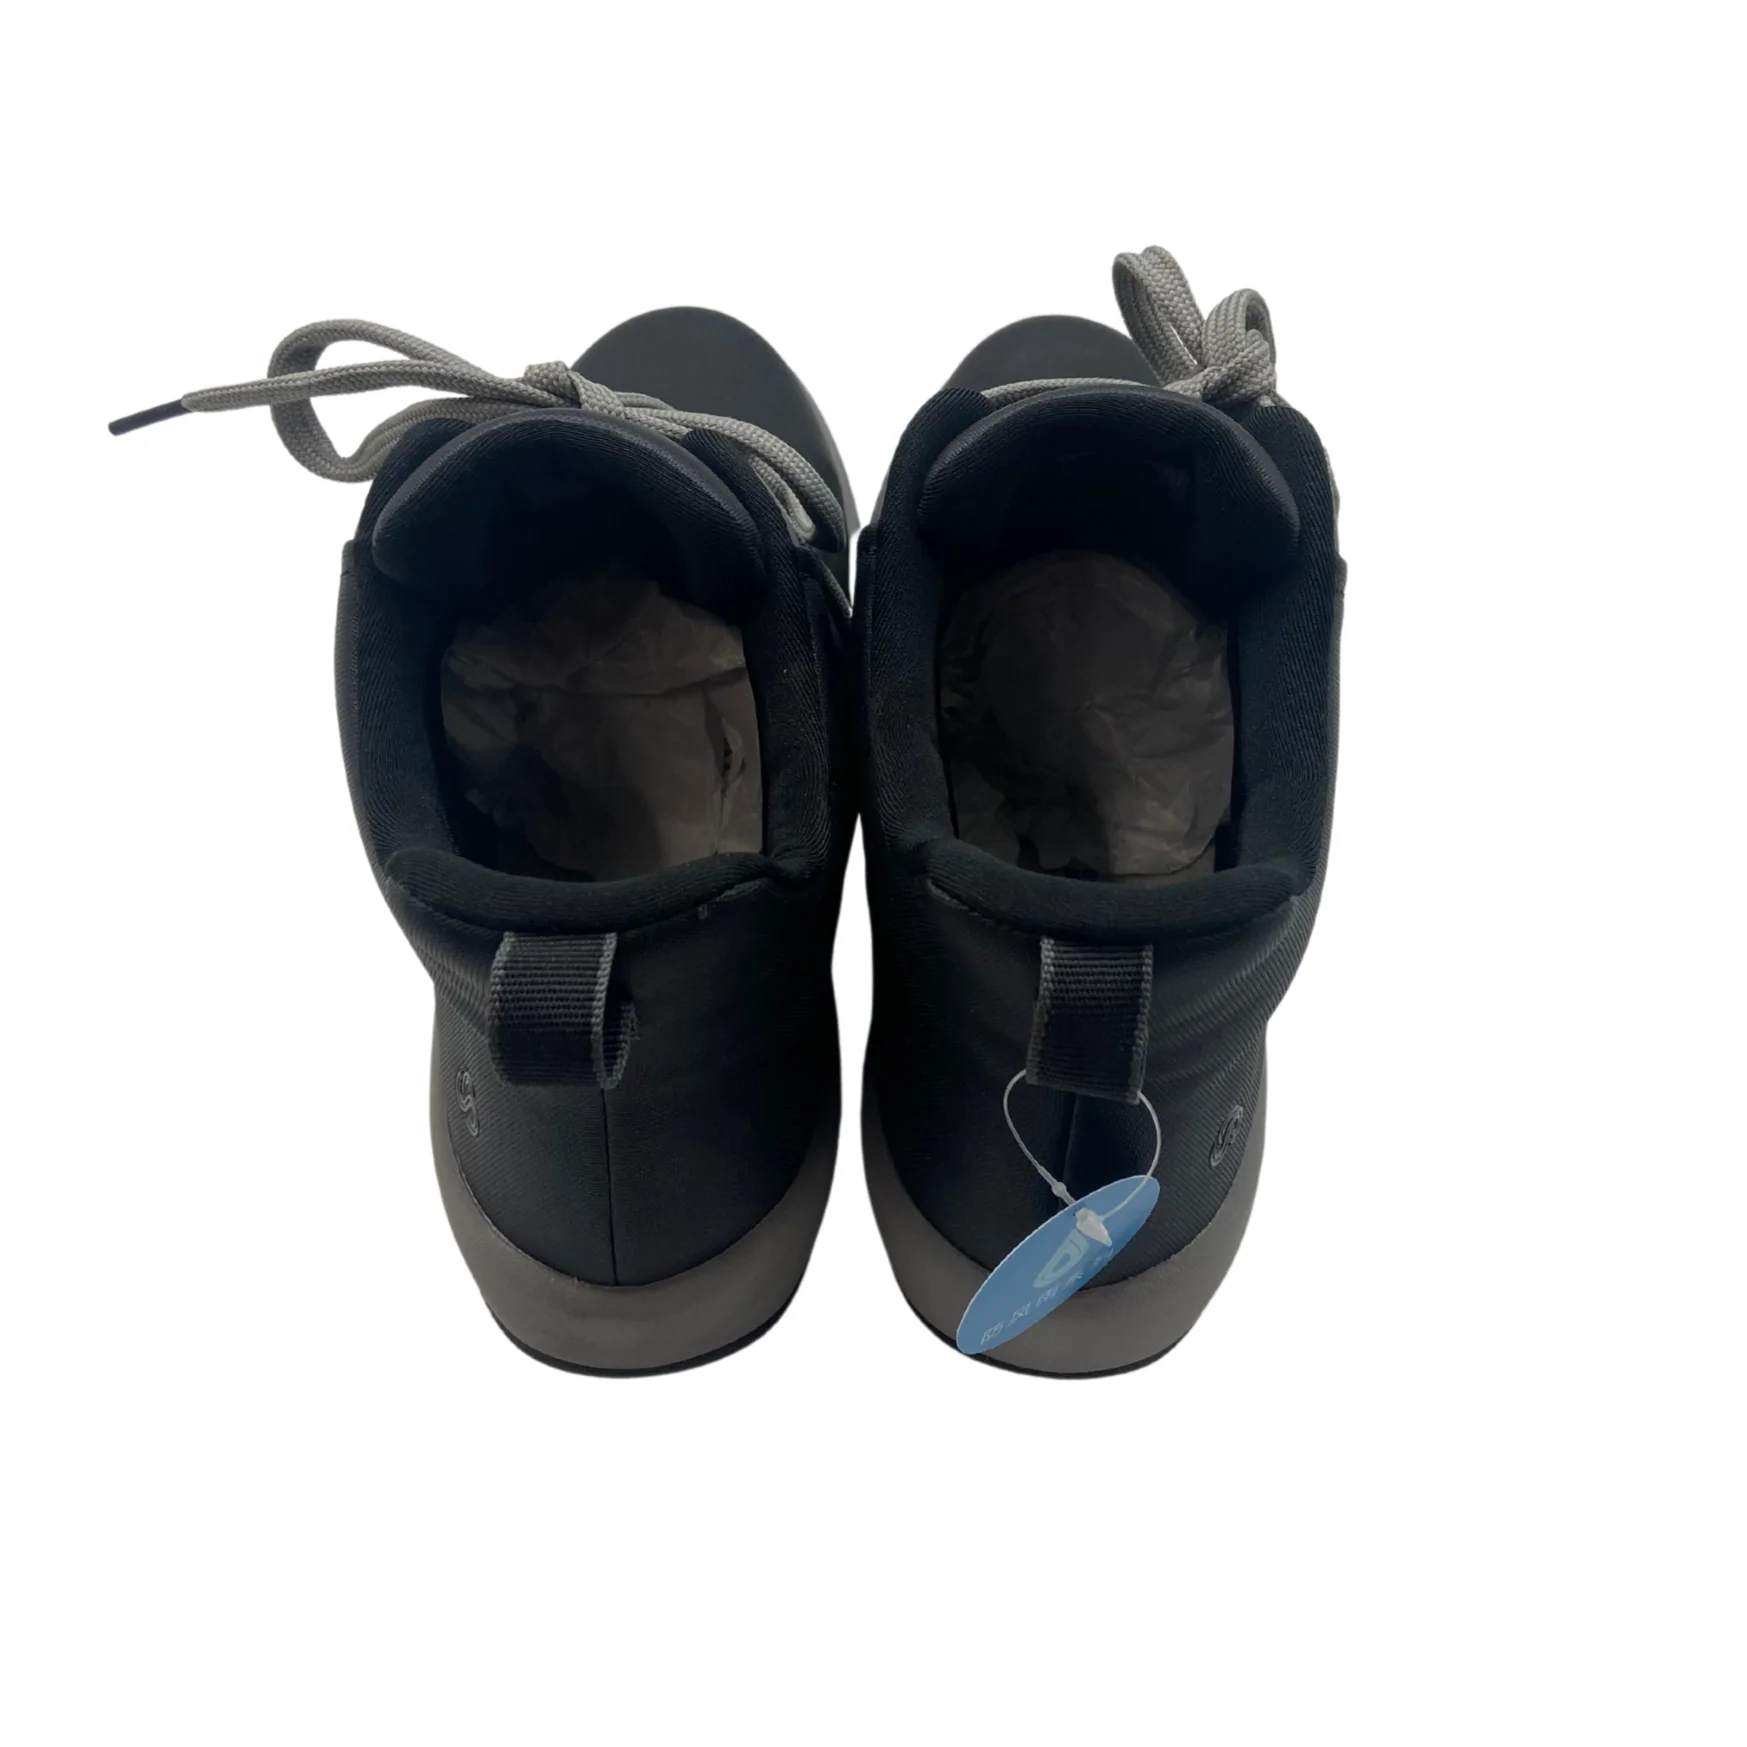 Clarks: Cloudsteppers /Men's Shoes / Black / Grey / Waterproof / Size 7